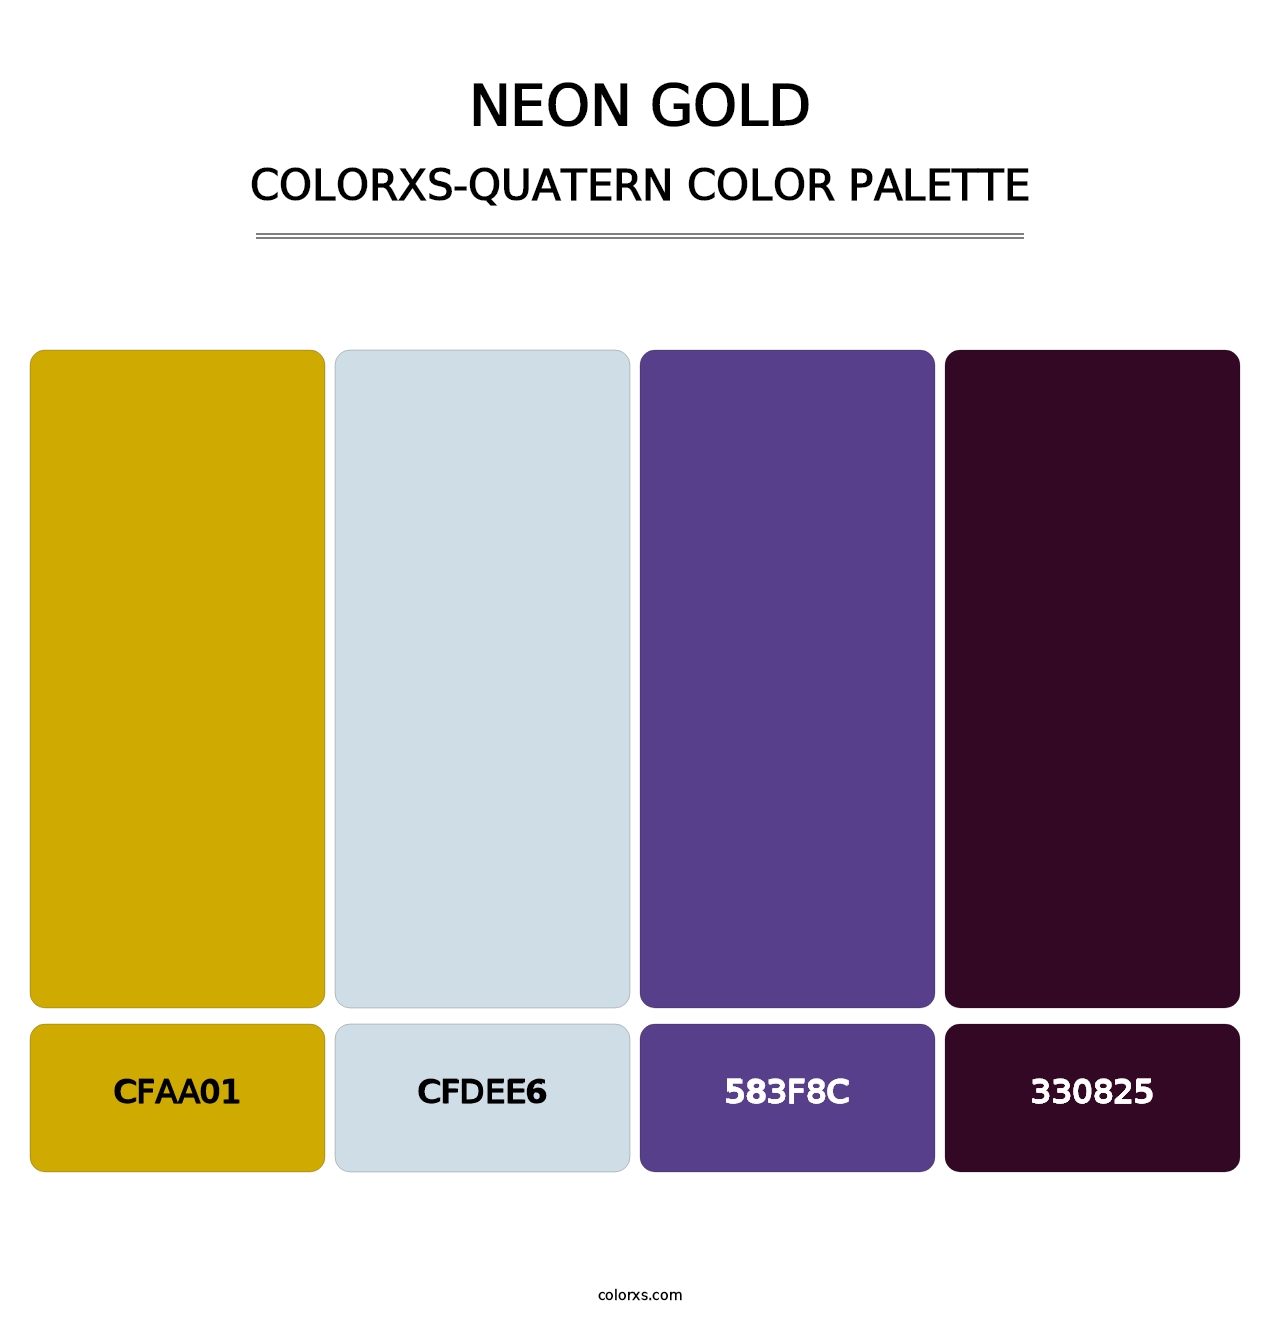 Neon Gold - Colorxs Quatern Palette